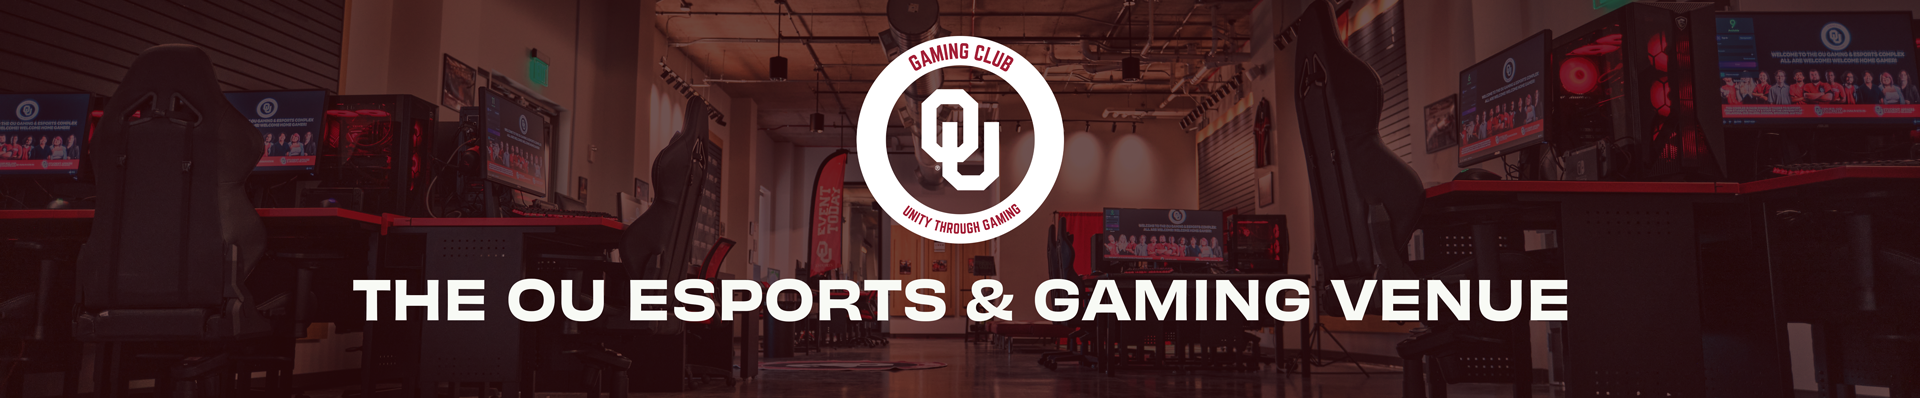 The OU Esports & Gaming Venue Banner